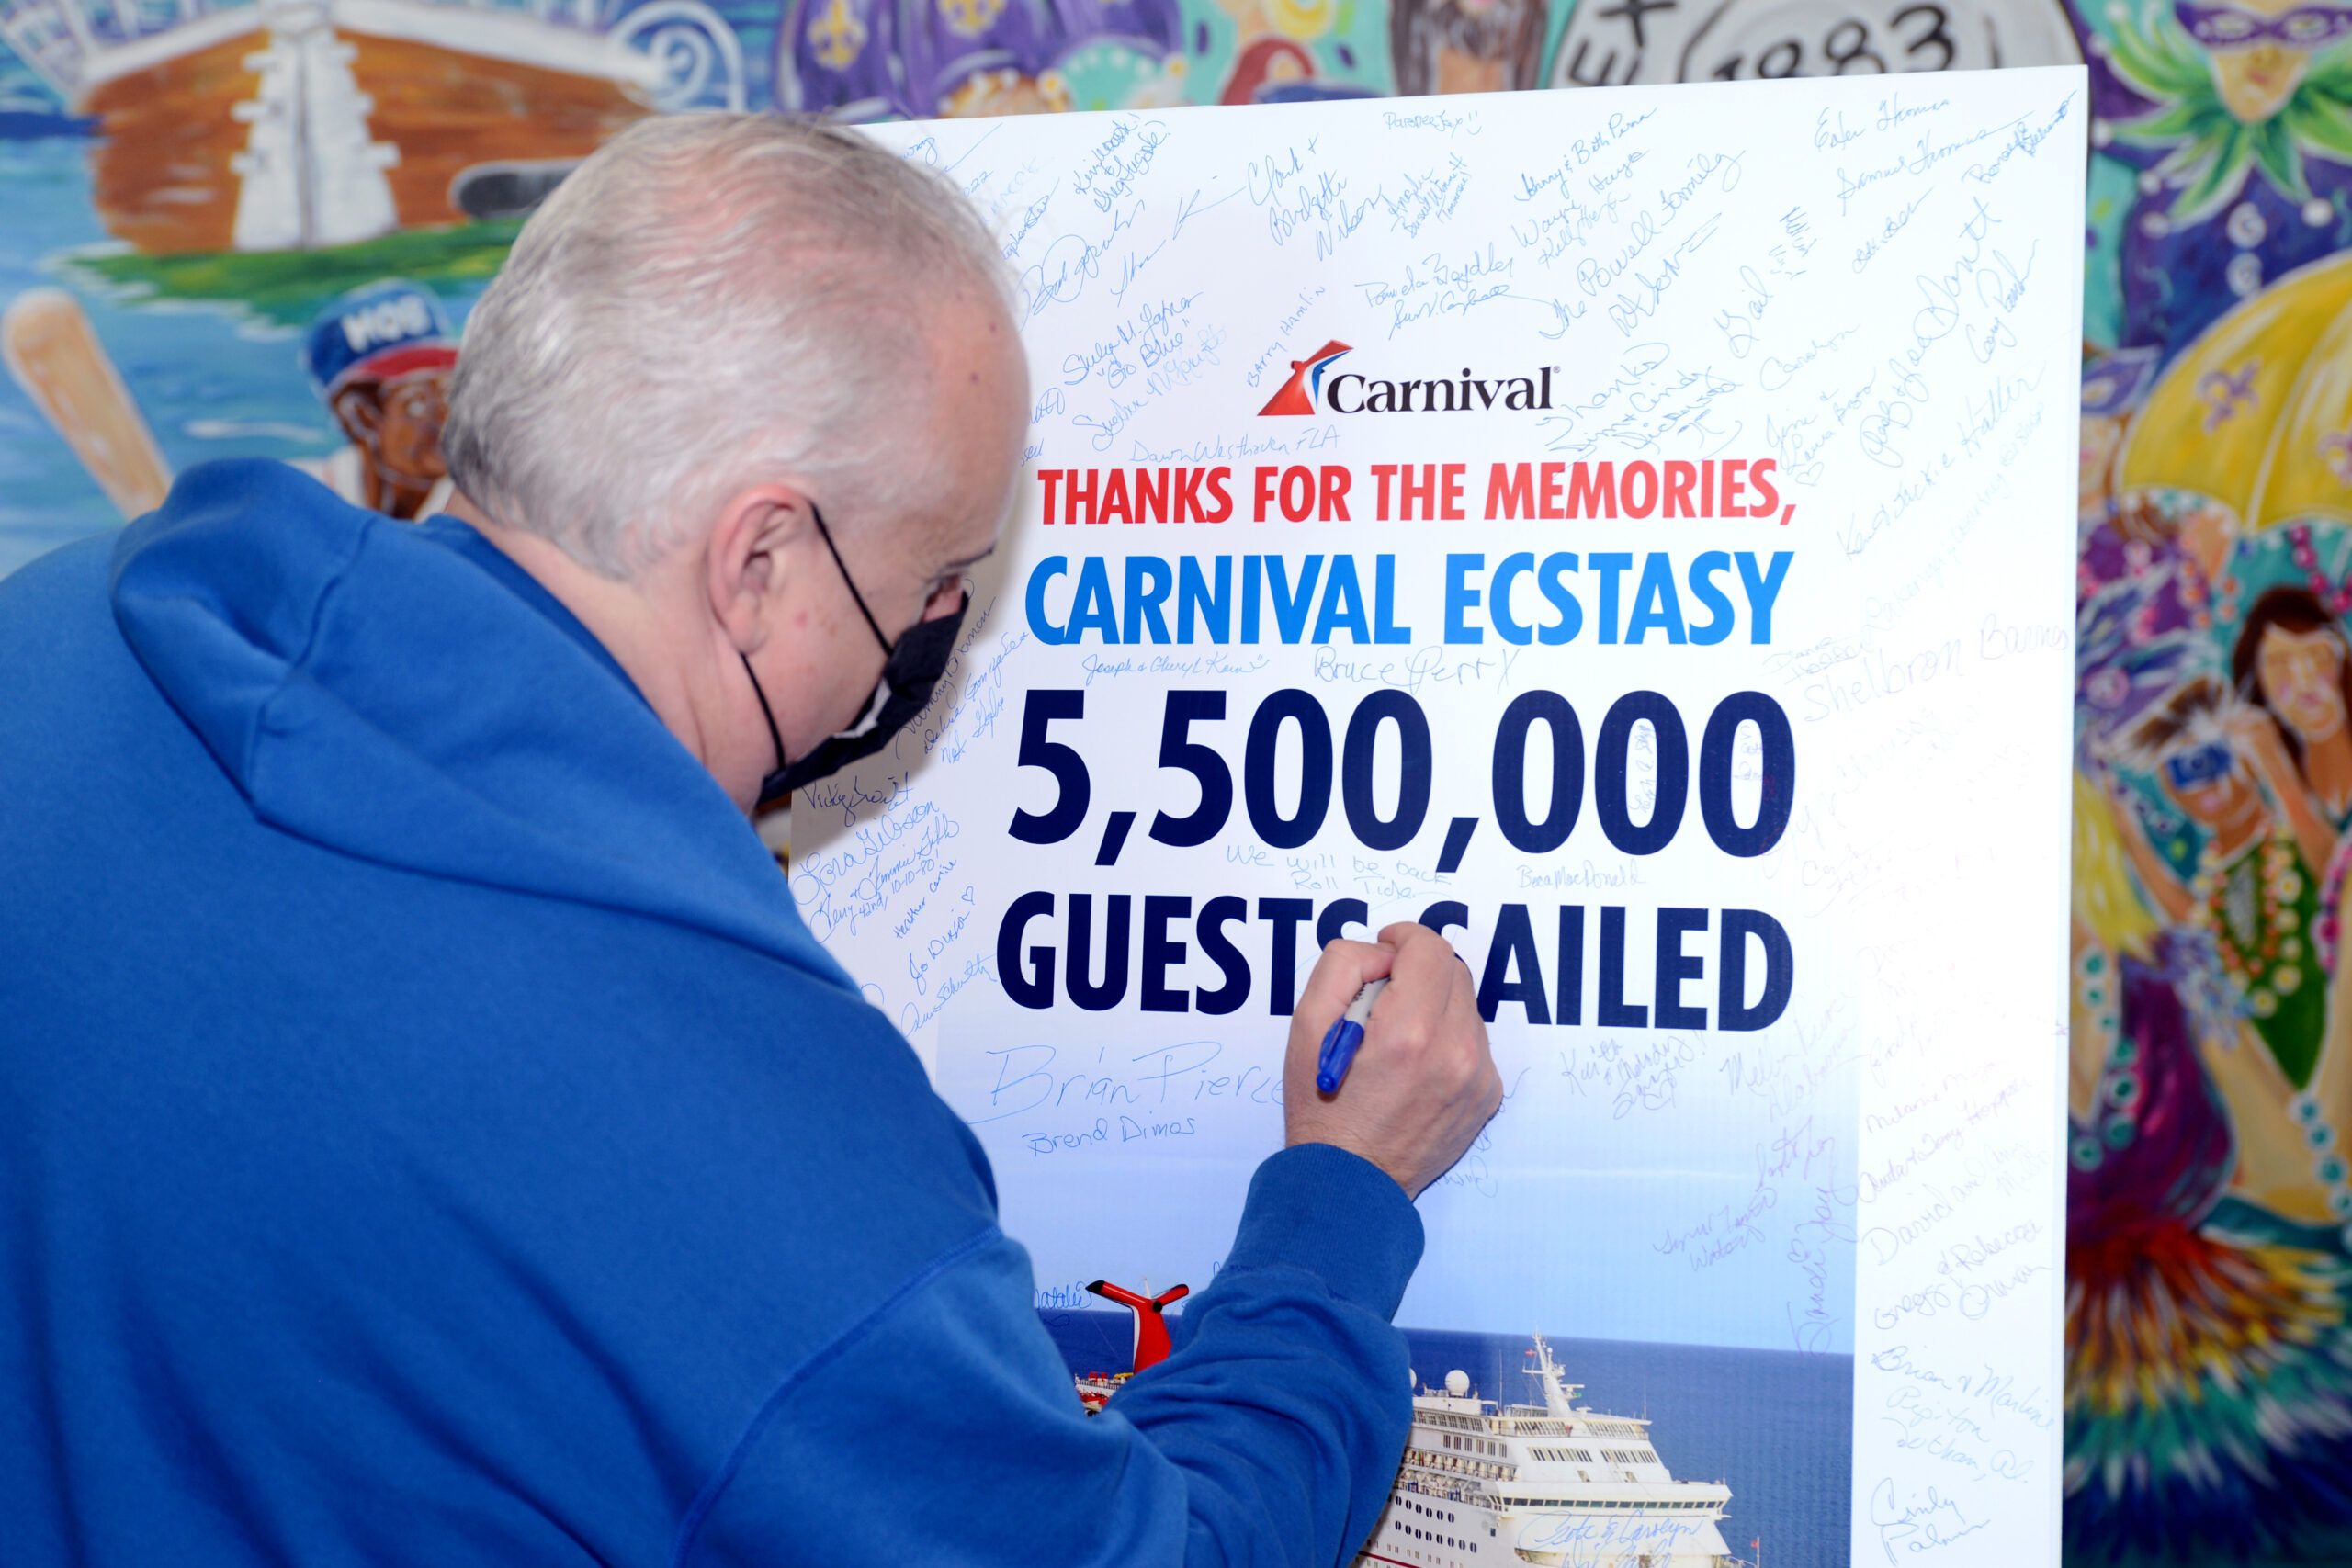 Carnival Ecstasy Sets Sail on Final Voyage